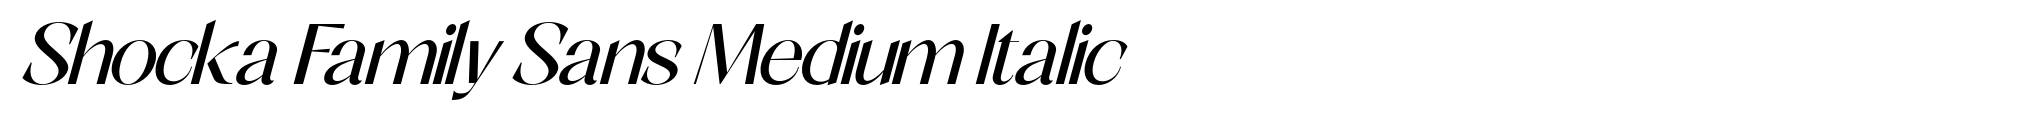 Shocka Family Sans Medium Italic image